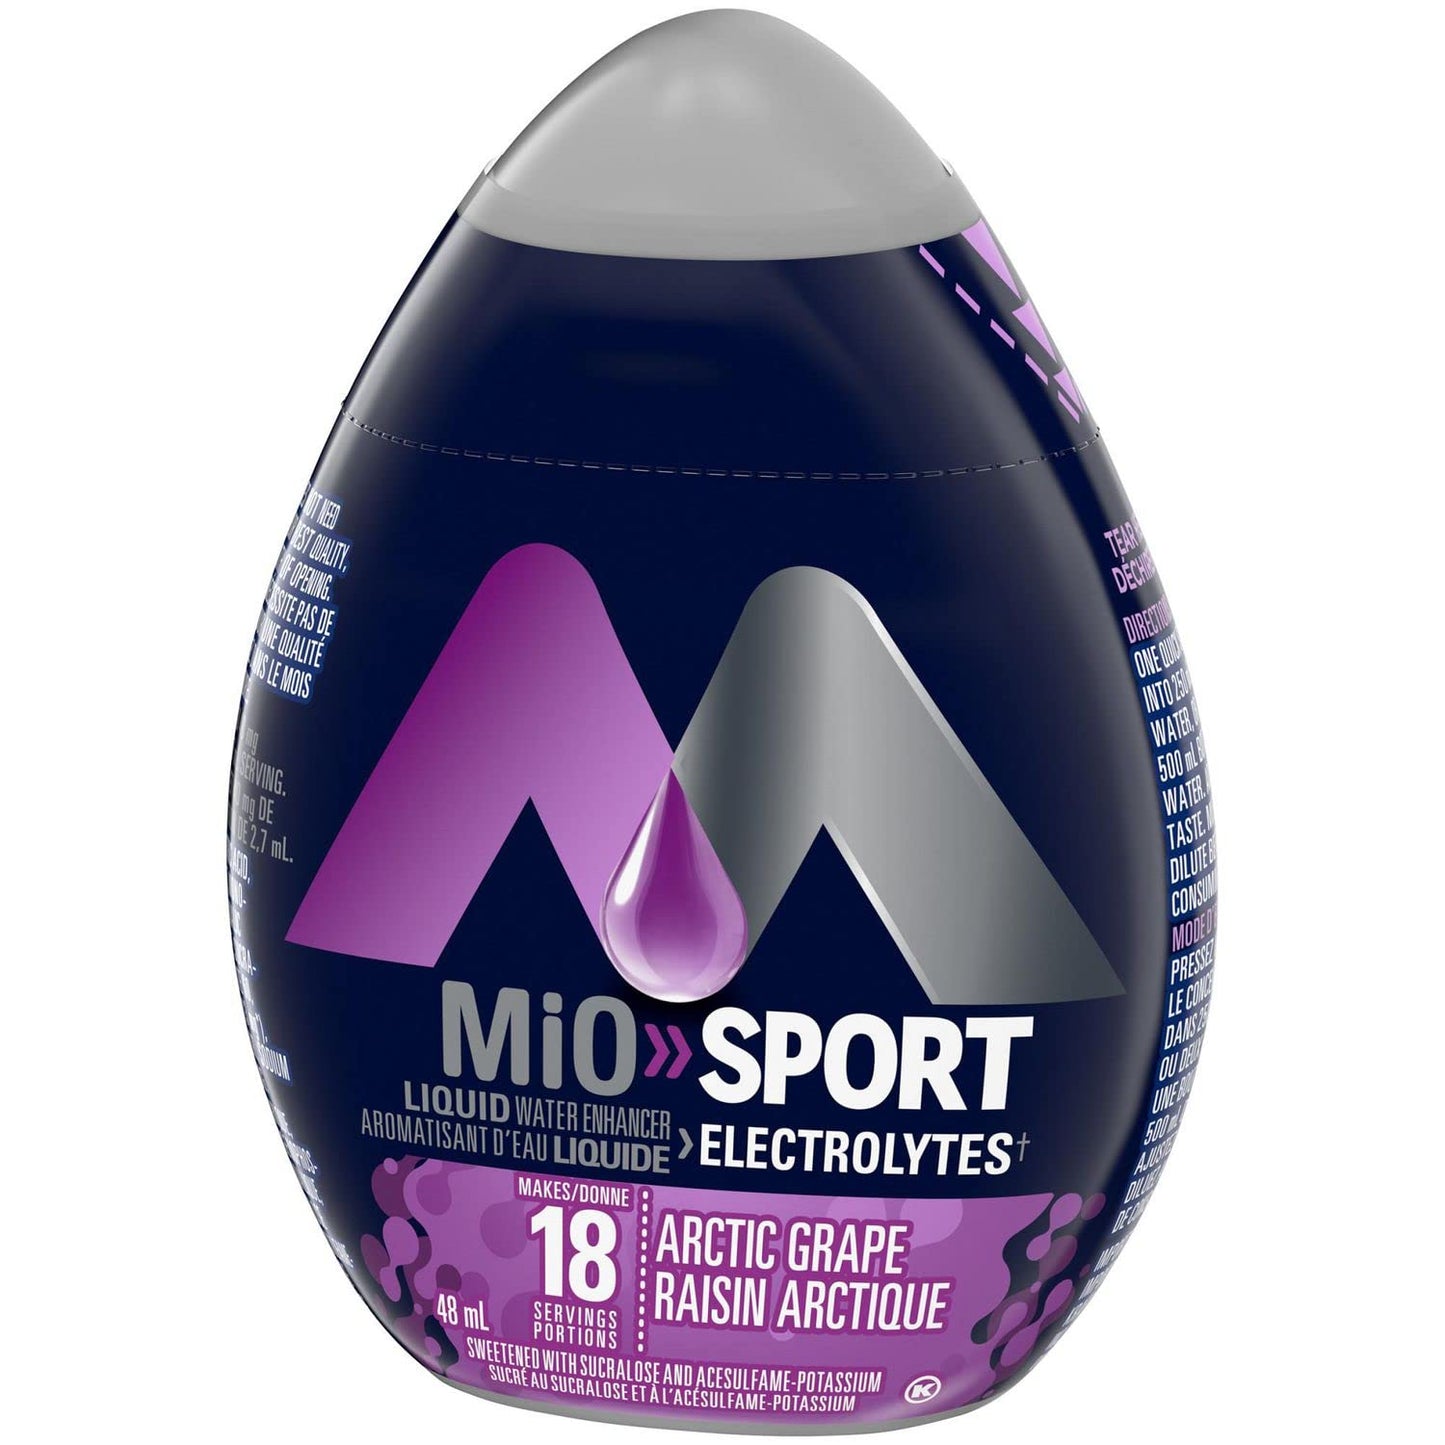 MiO Sport Arctic Grape Electrolyte Liquid Water Enhancer, 48mL/1.6 fl. oz. (Shipped from Canada)